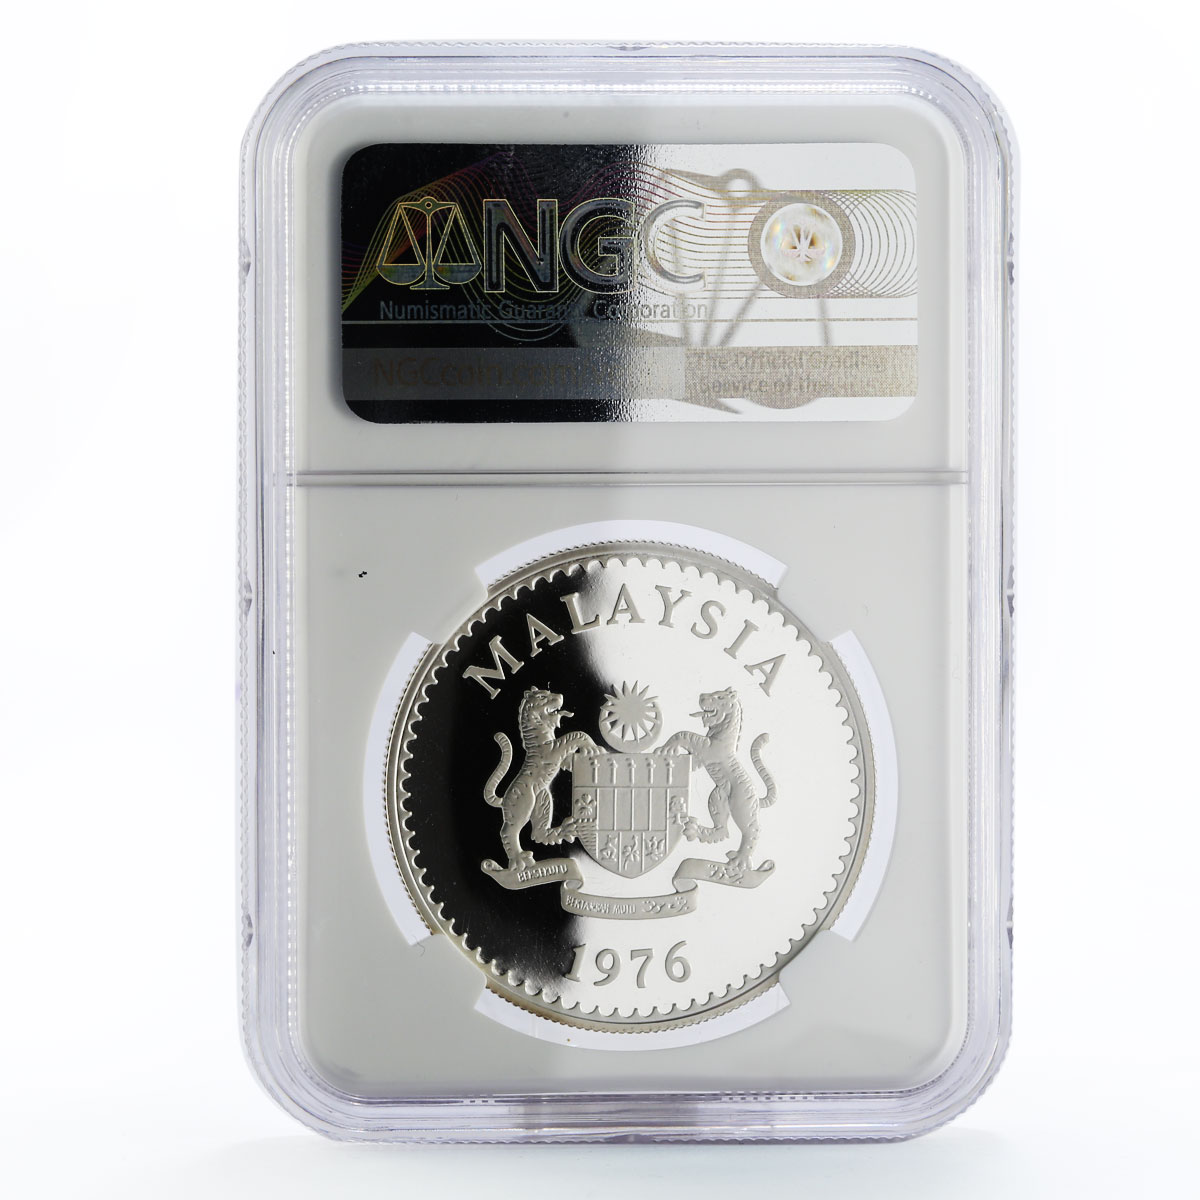 Malaysia 15 ringgit Conservation series Malaysian Gaur PF70 NGC silver coin 1976